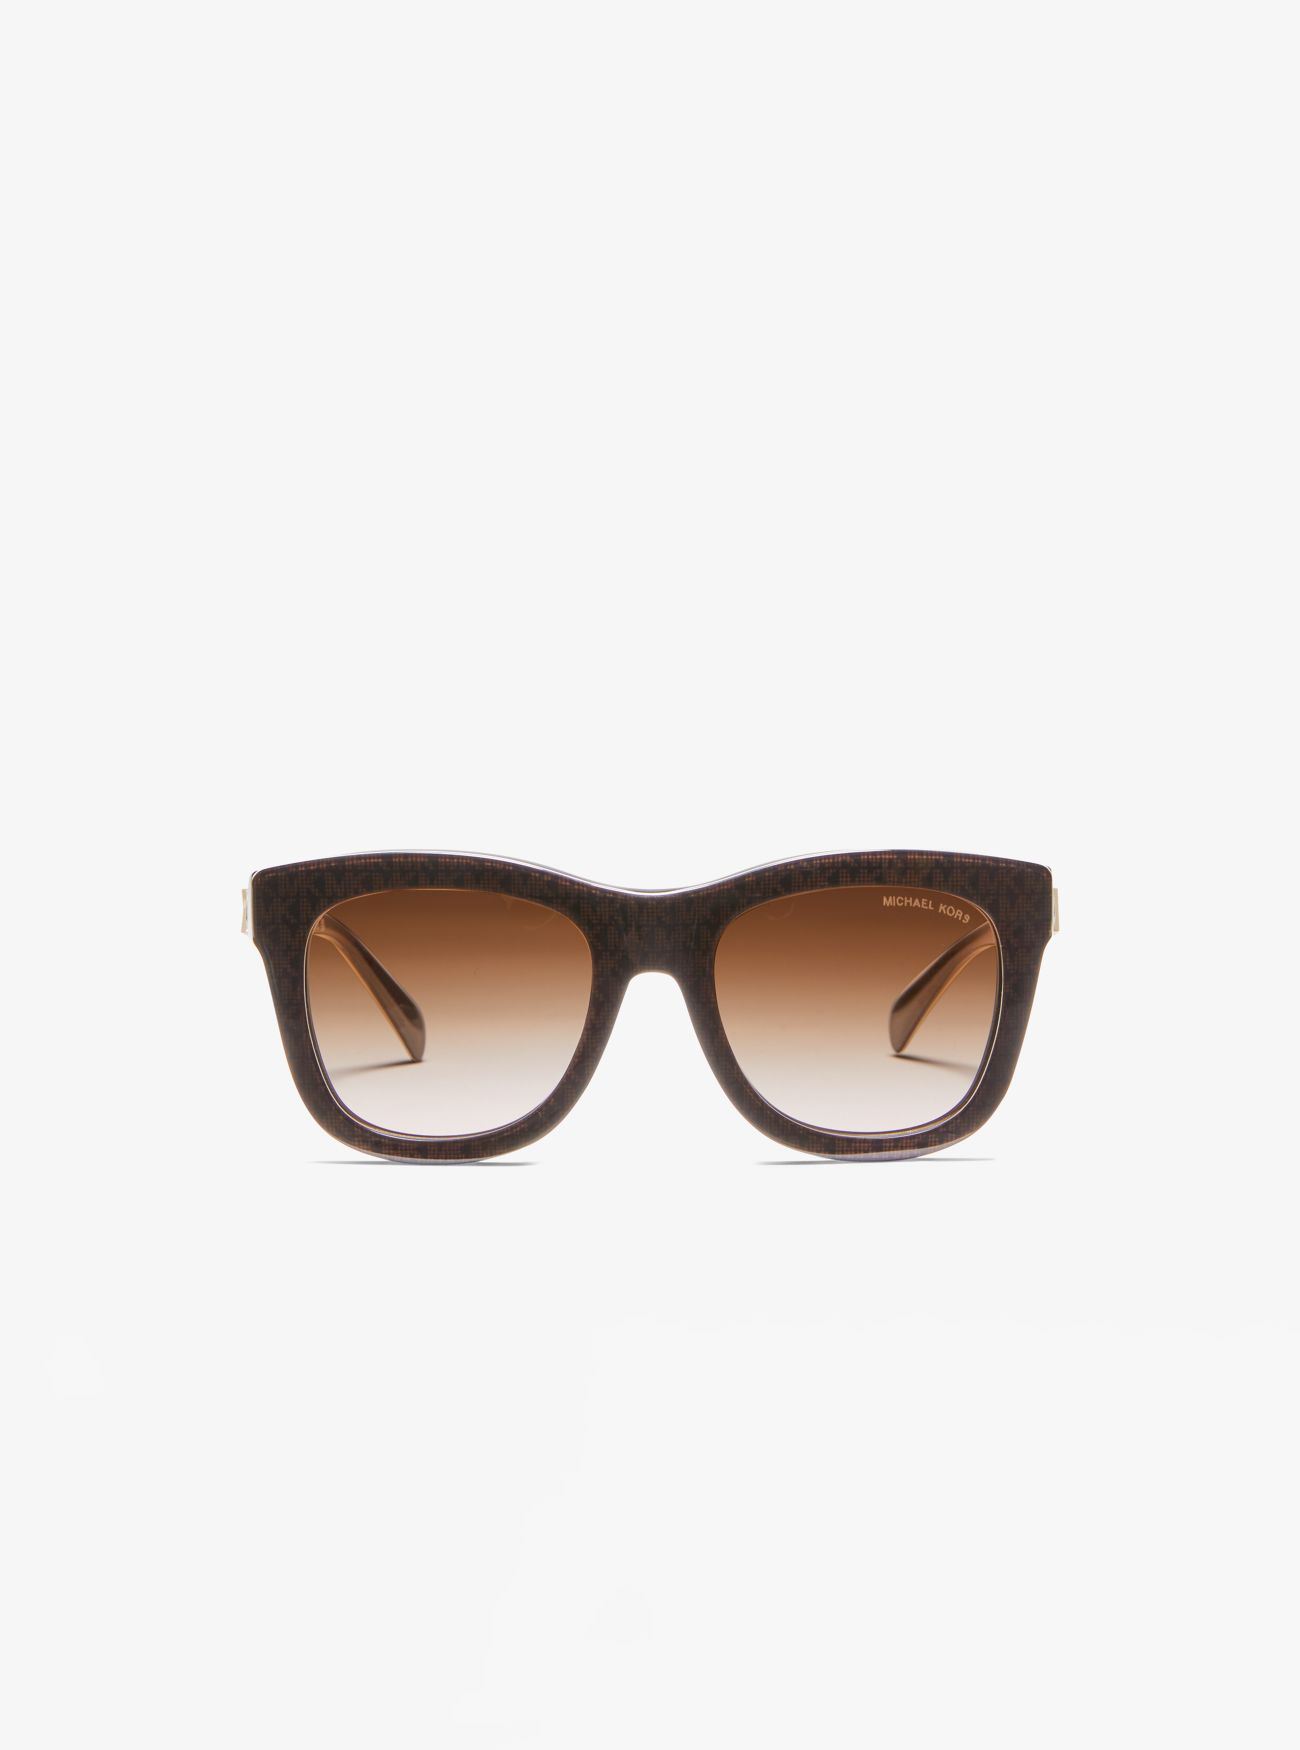 MK Empire 4 Square Sunglasses - Chocolate - Michael Kors